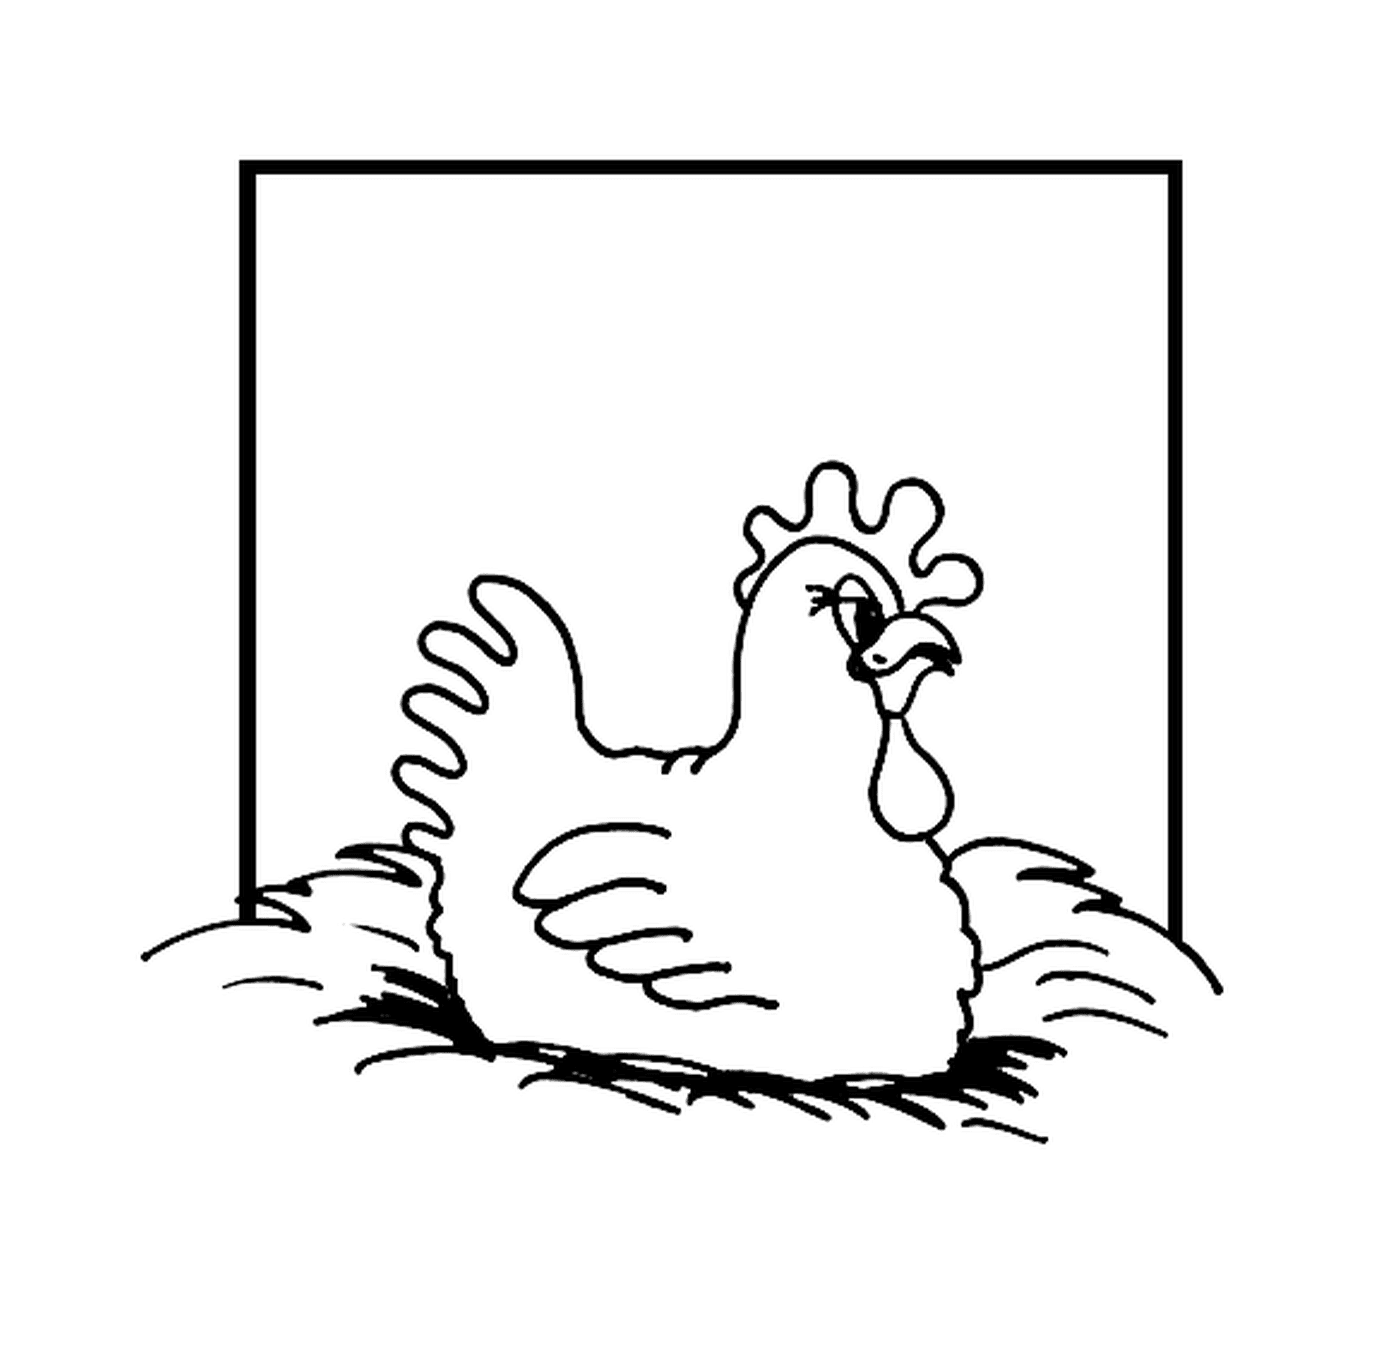  Egg brooding chicken 